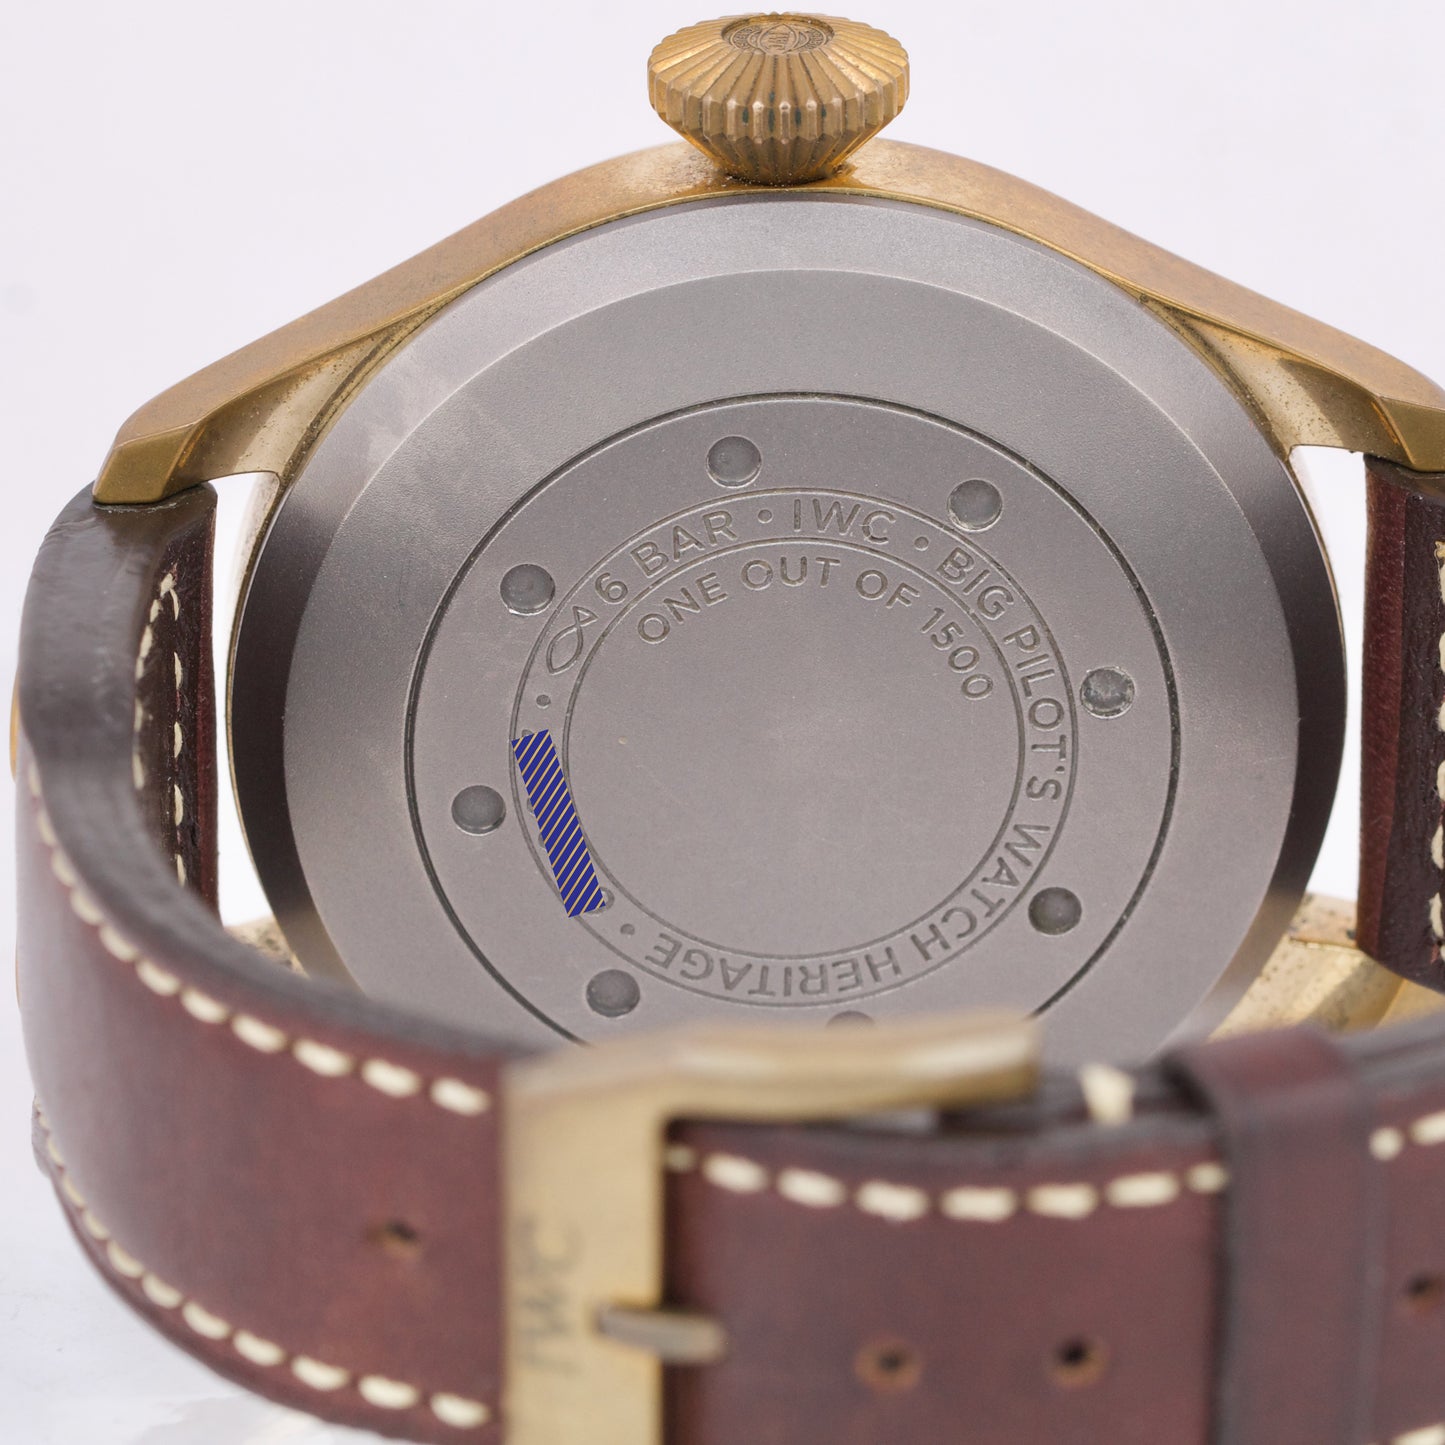 IWC Big Pilot BRONZE Black Arabic Automatic Brown Leather 46mm Watch IW501005